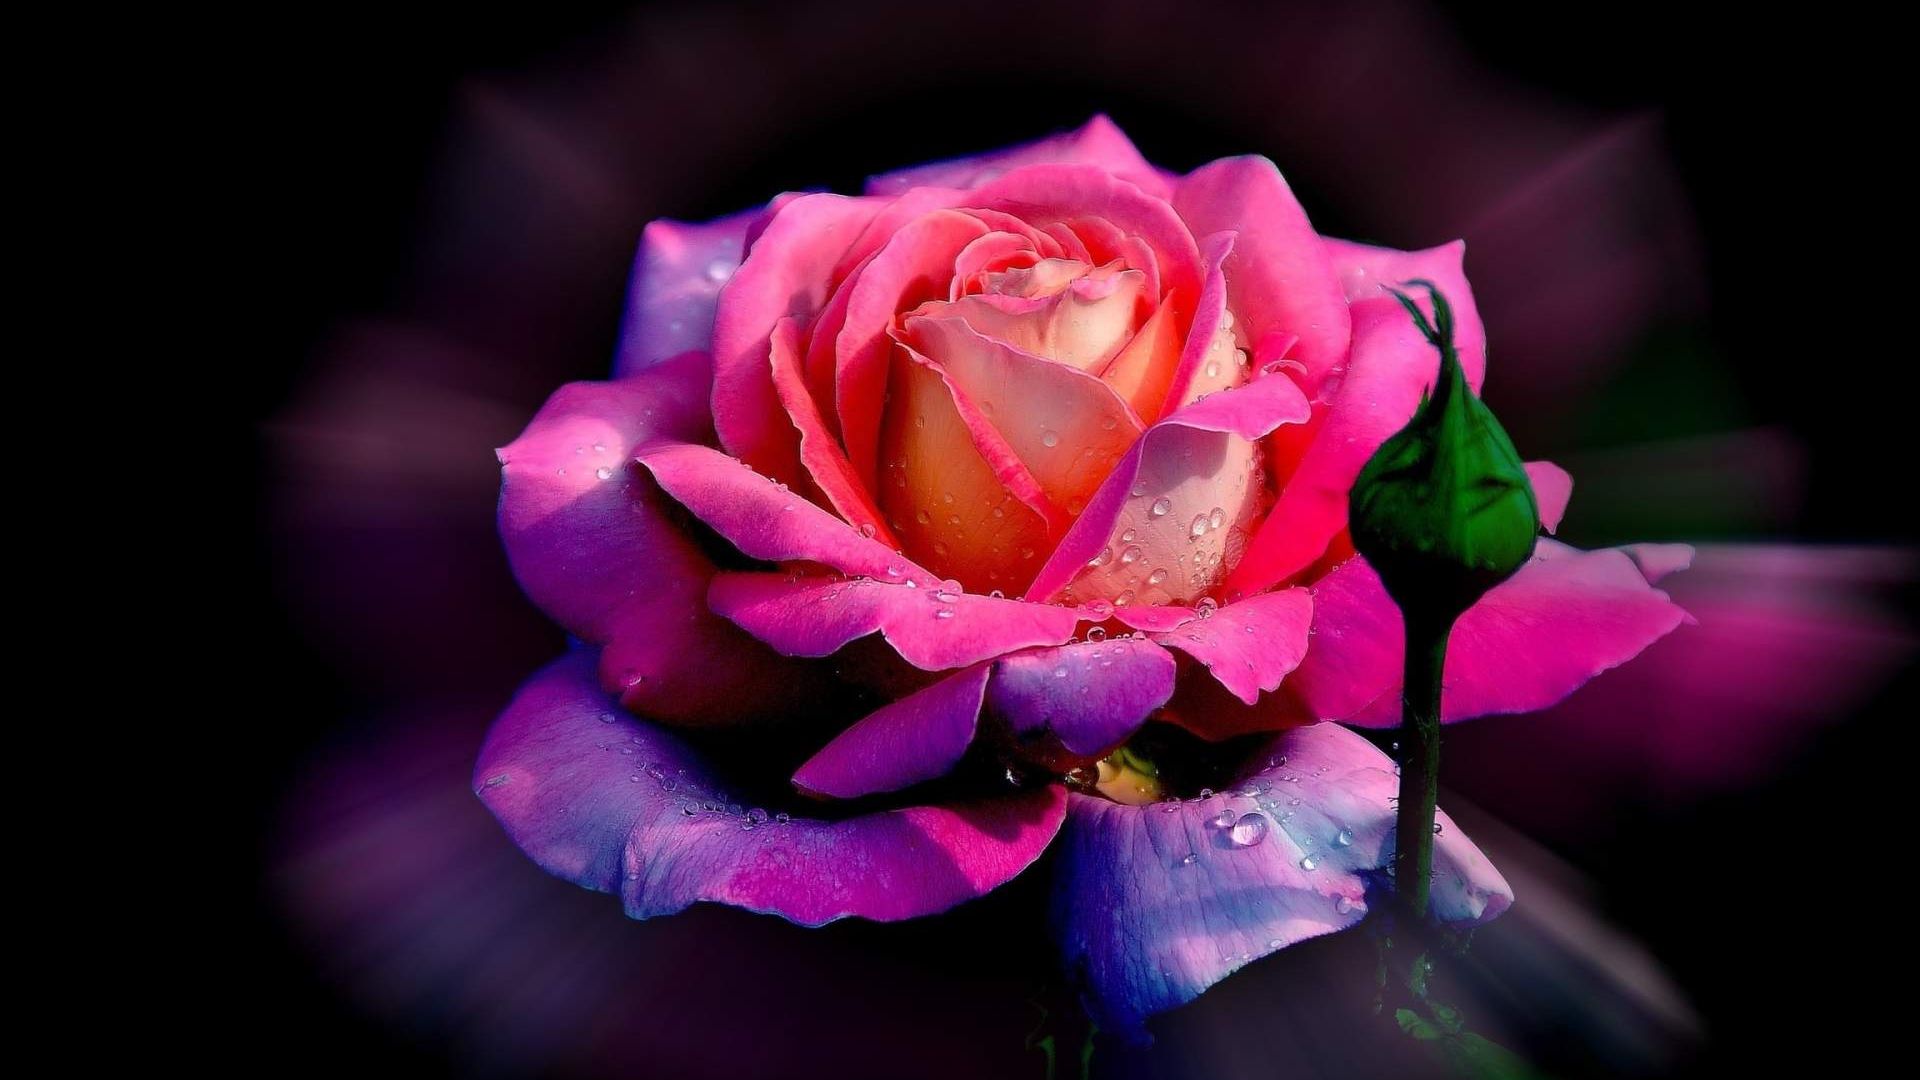 Desktop Wallpaper Beautiful Rose Flower, Hd Image, Picture, Background,  Gpzkwv